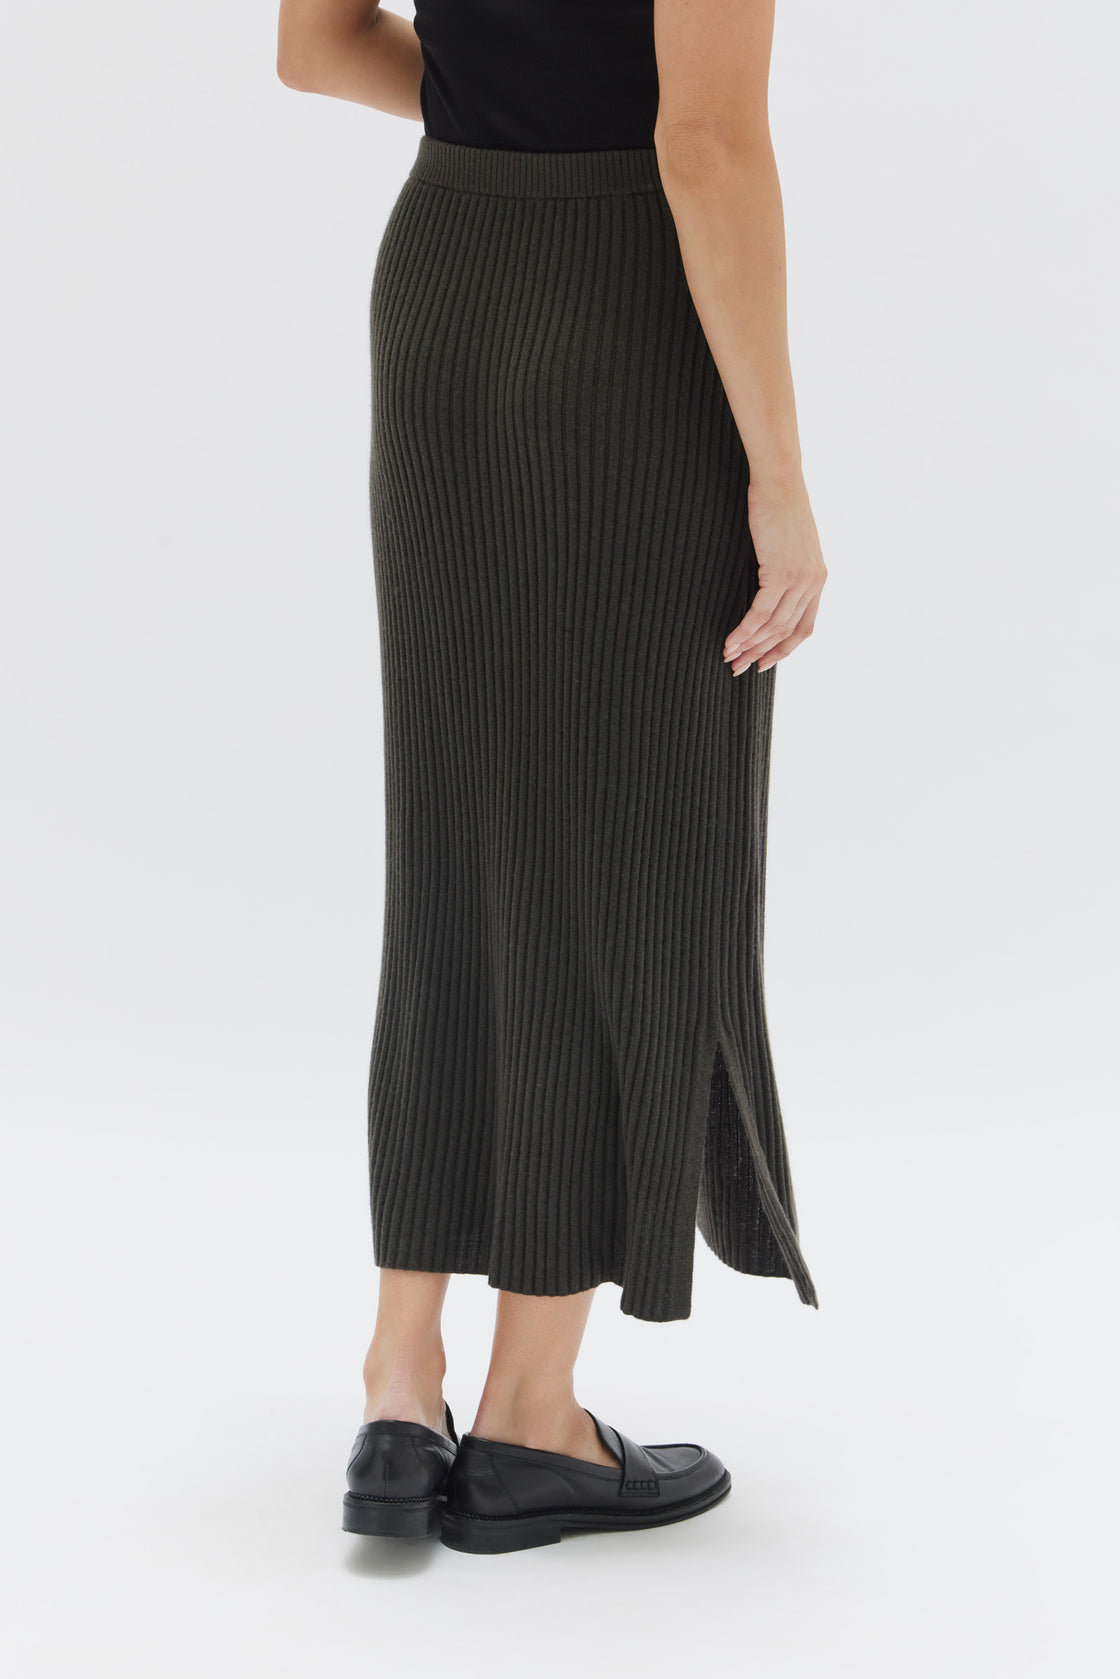 Wool Cashmere Rib Skirt - Clove